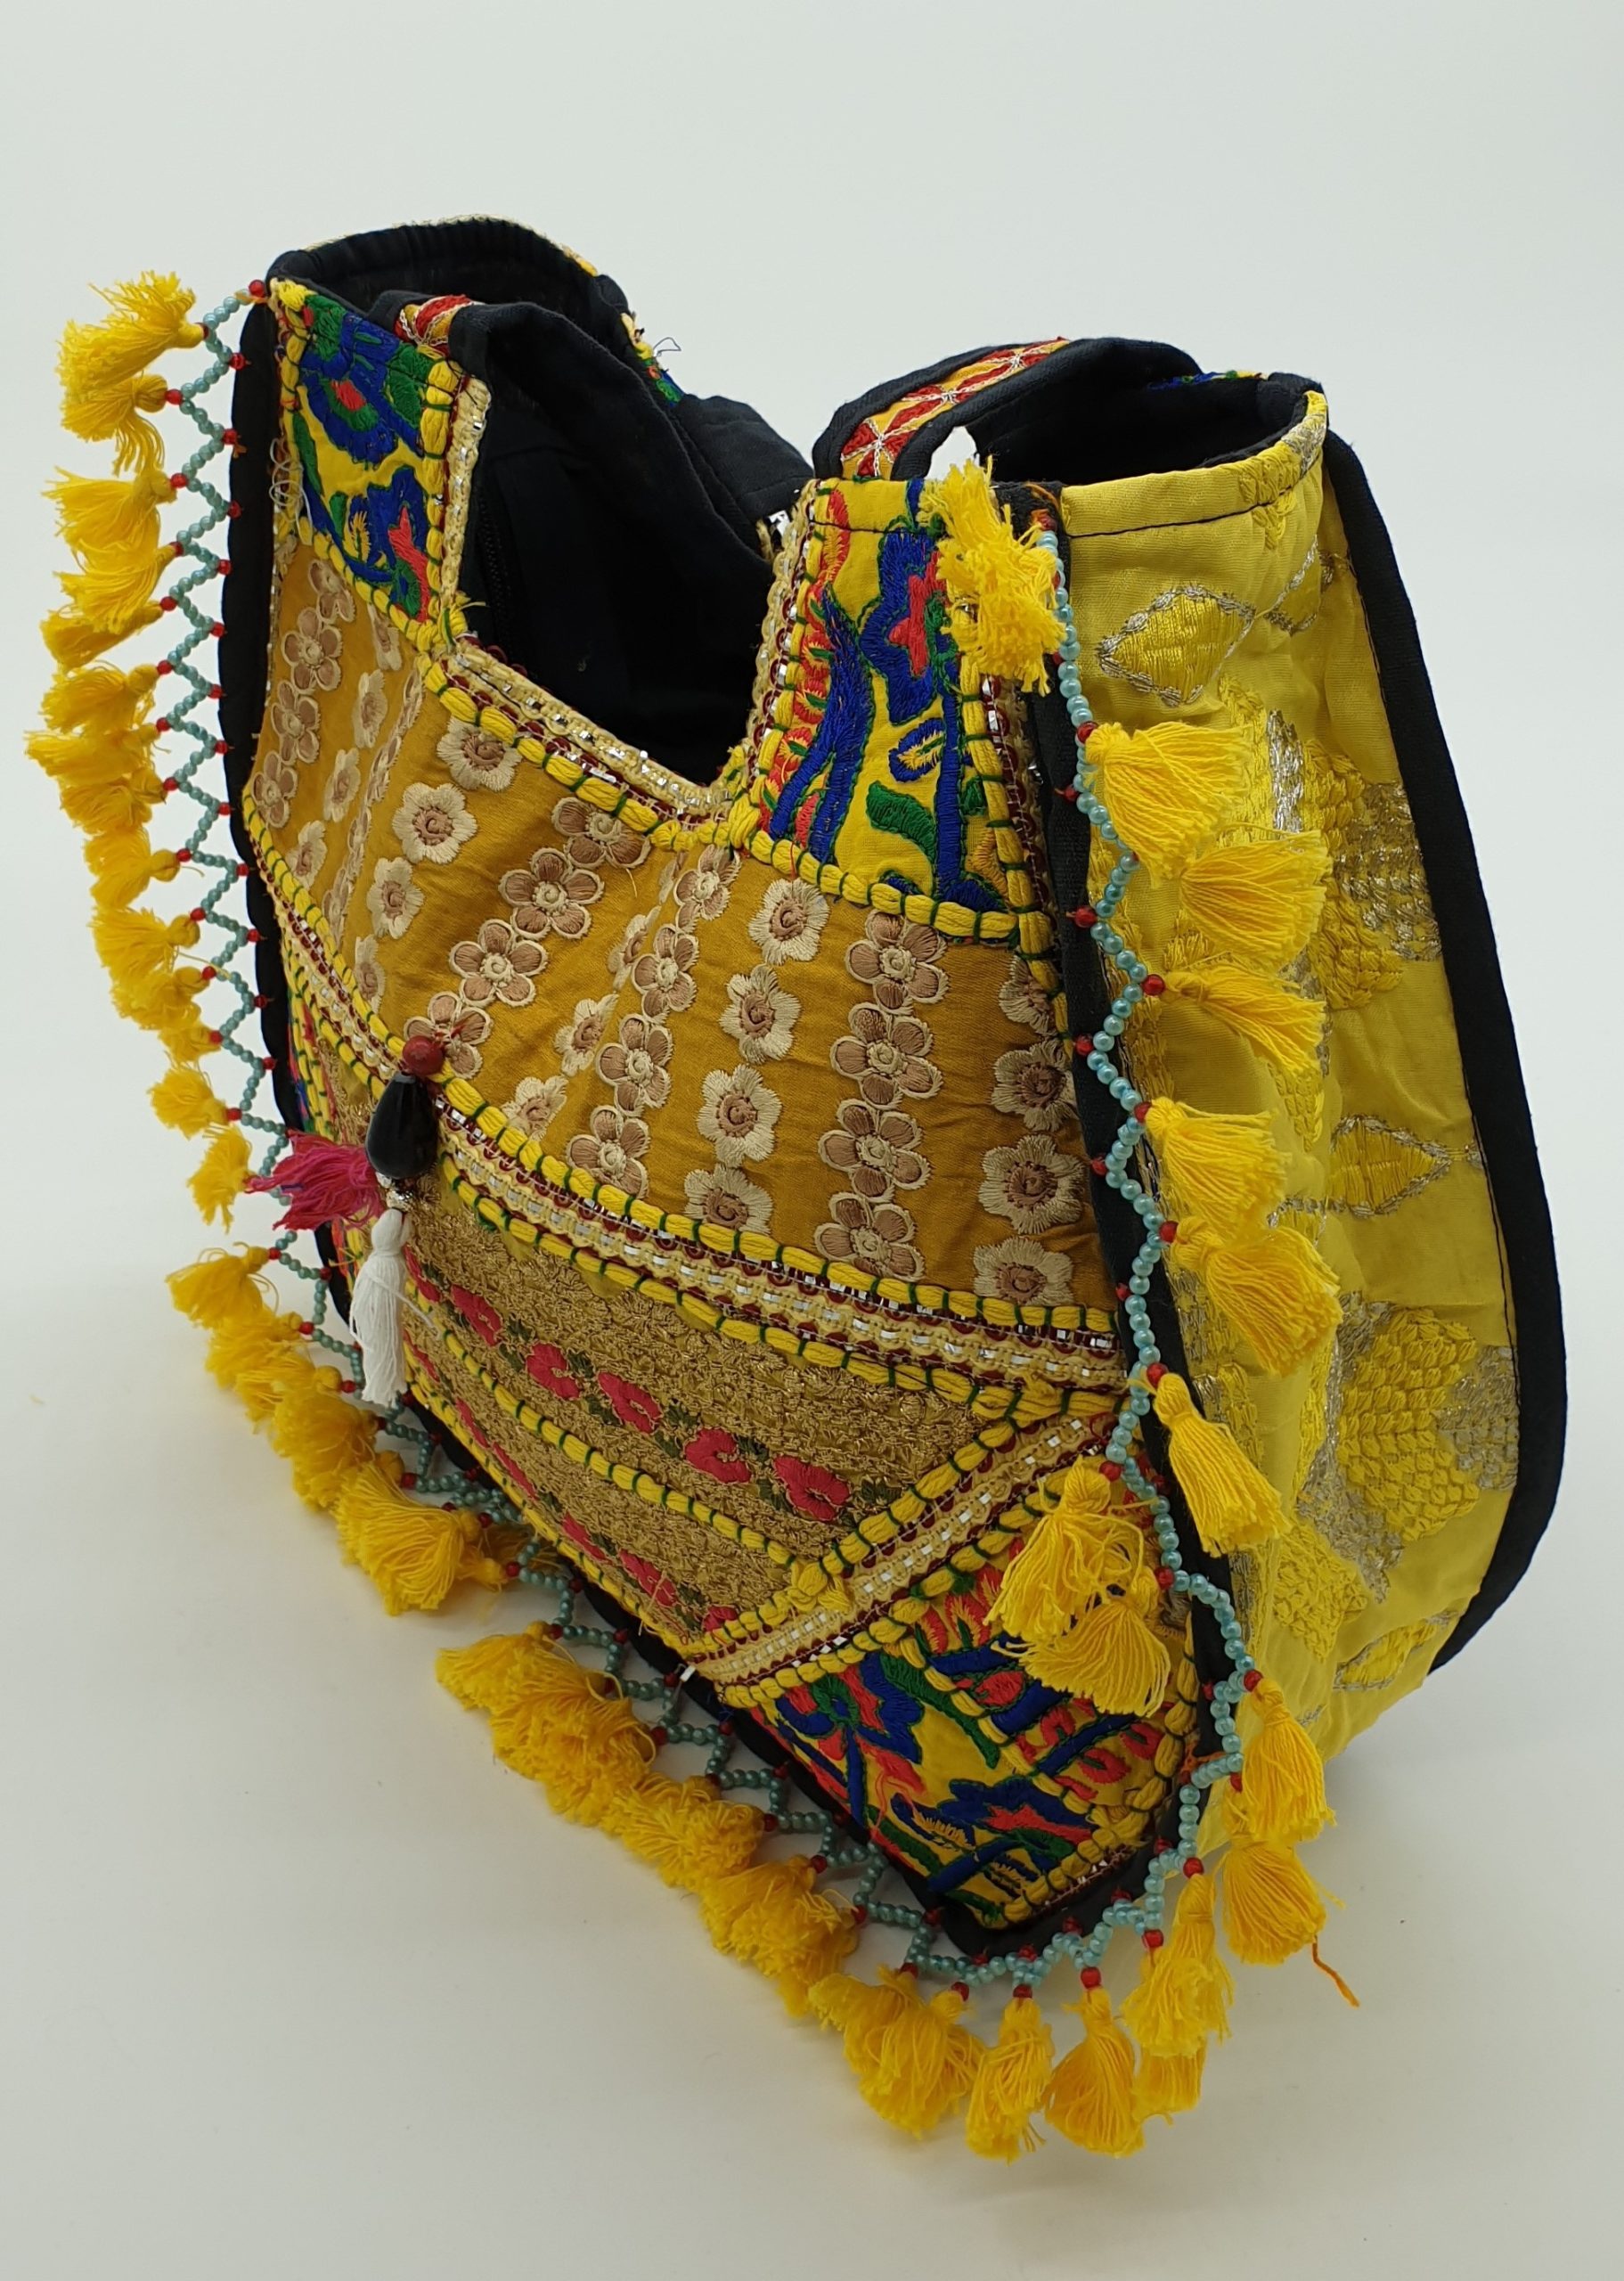 Artisan Large Recycled Yellow Hippy Patchwork Handbag